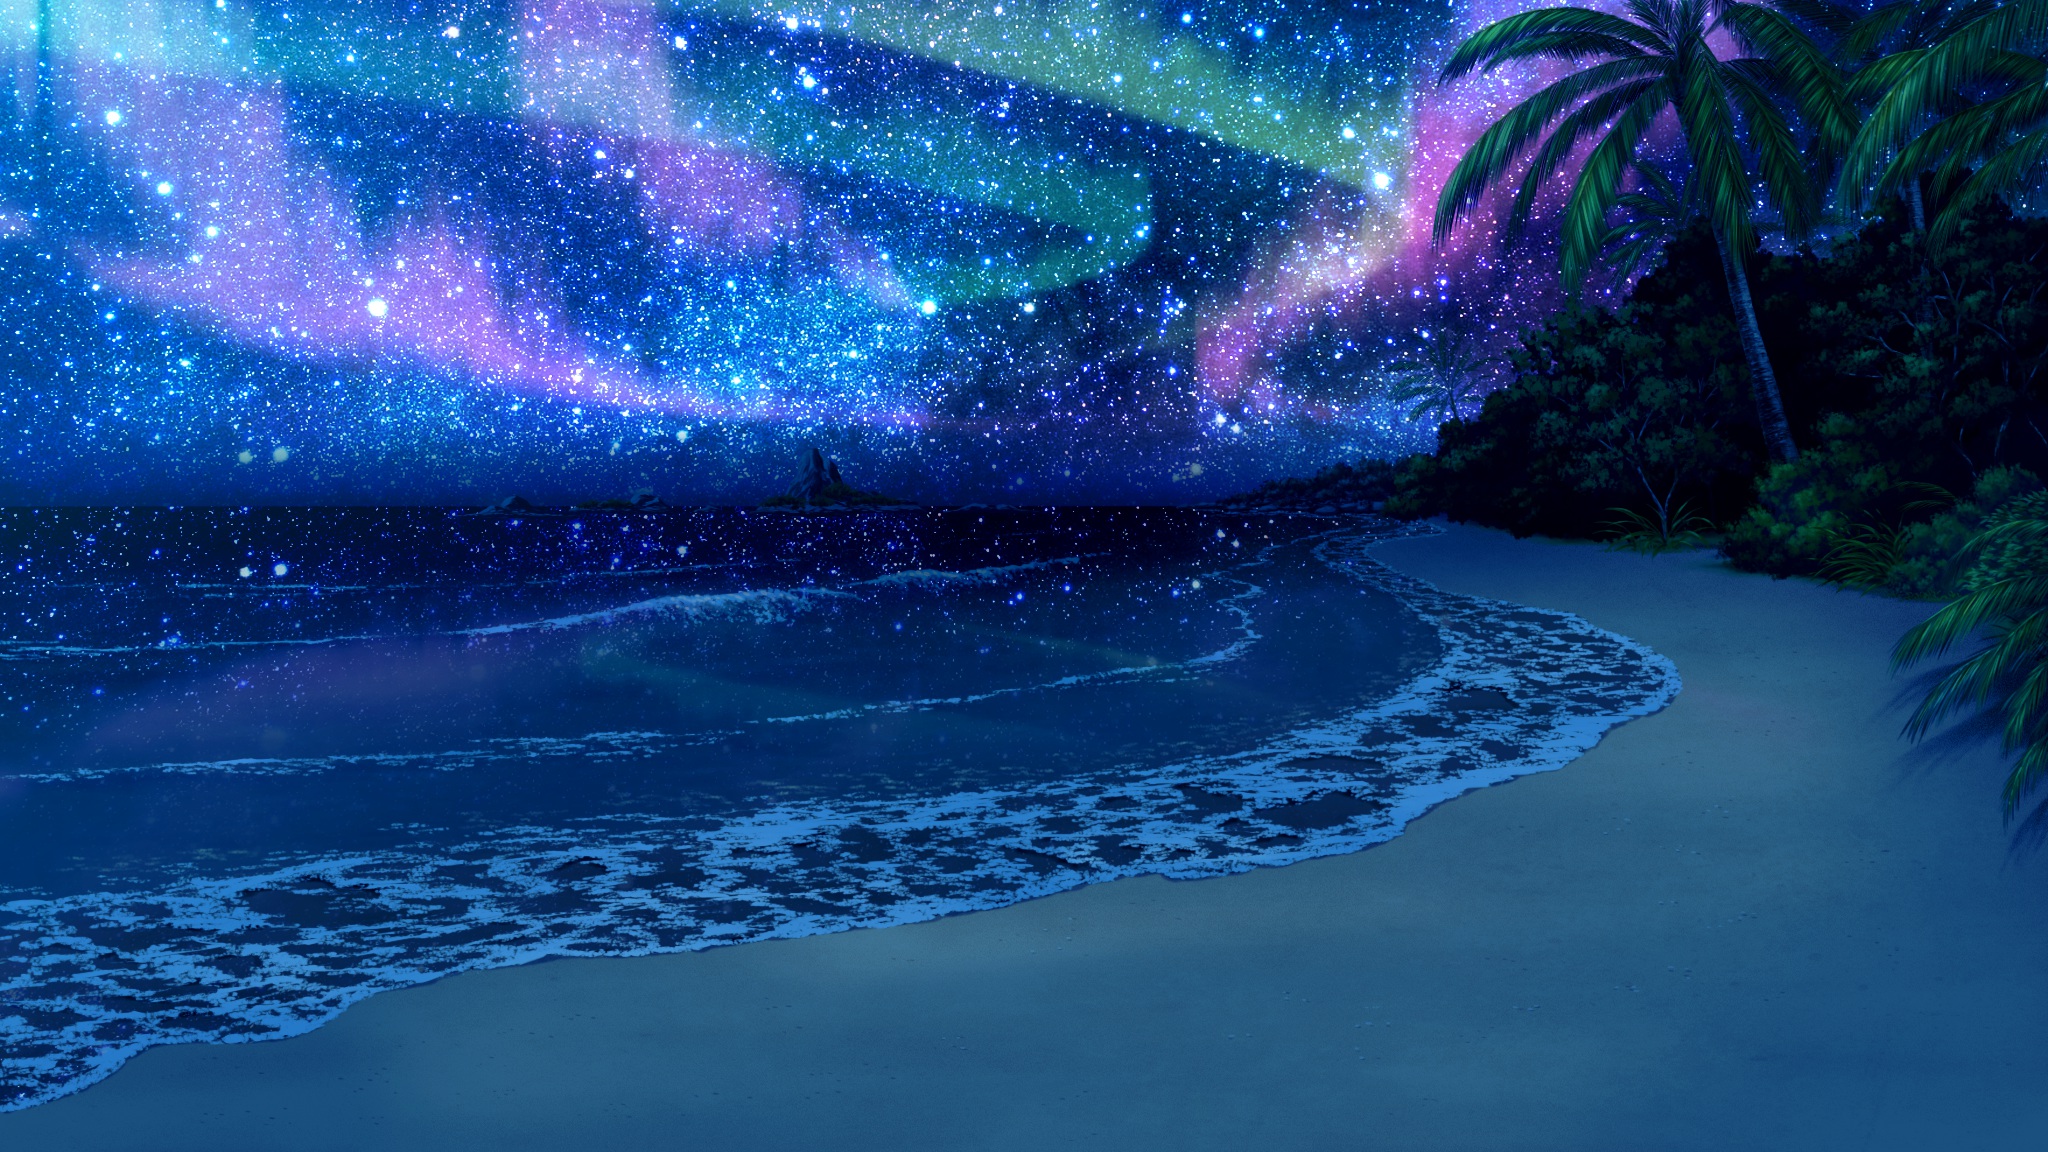 Free Download Beach At Night Backgrounds | PixelsTalk.Net - 2048 x 1152 jpeg 993kB